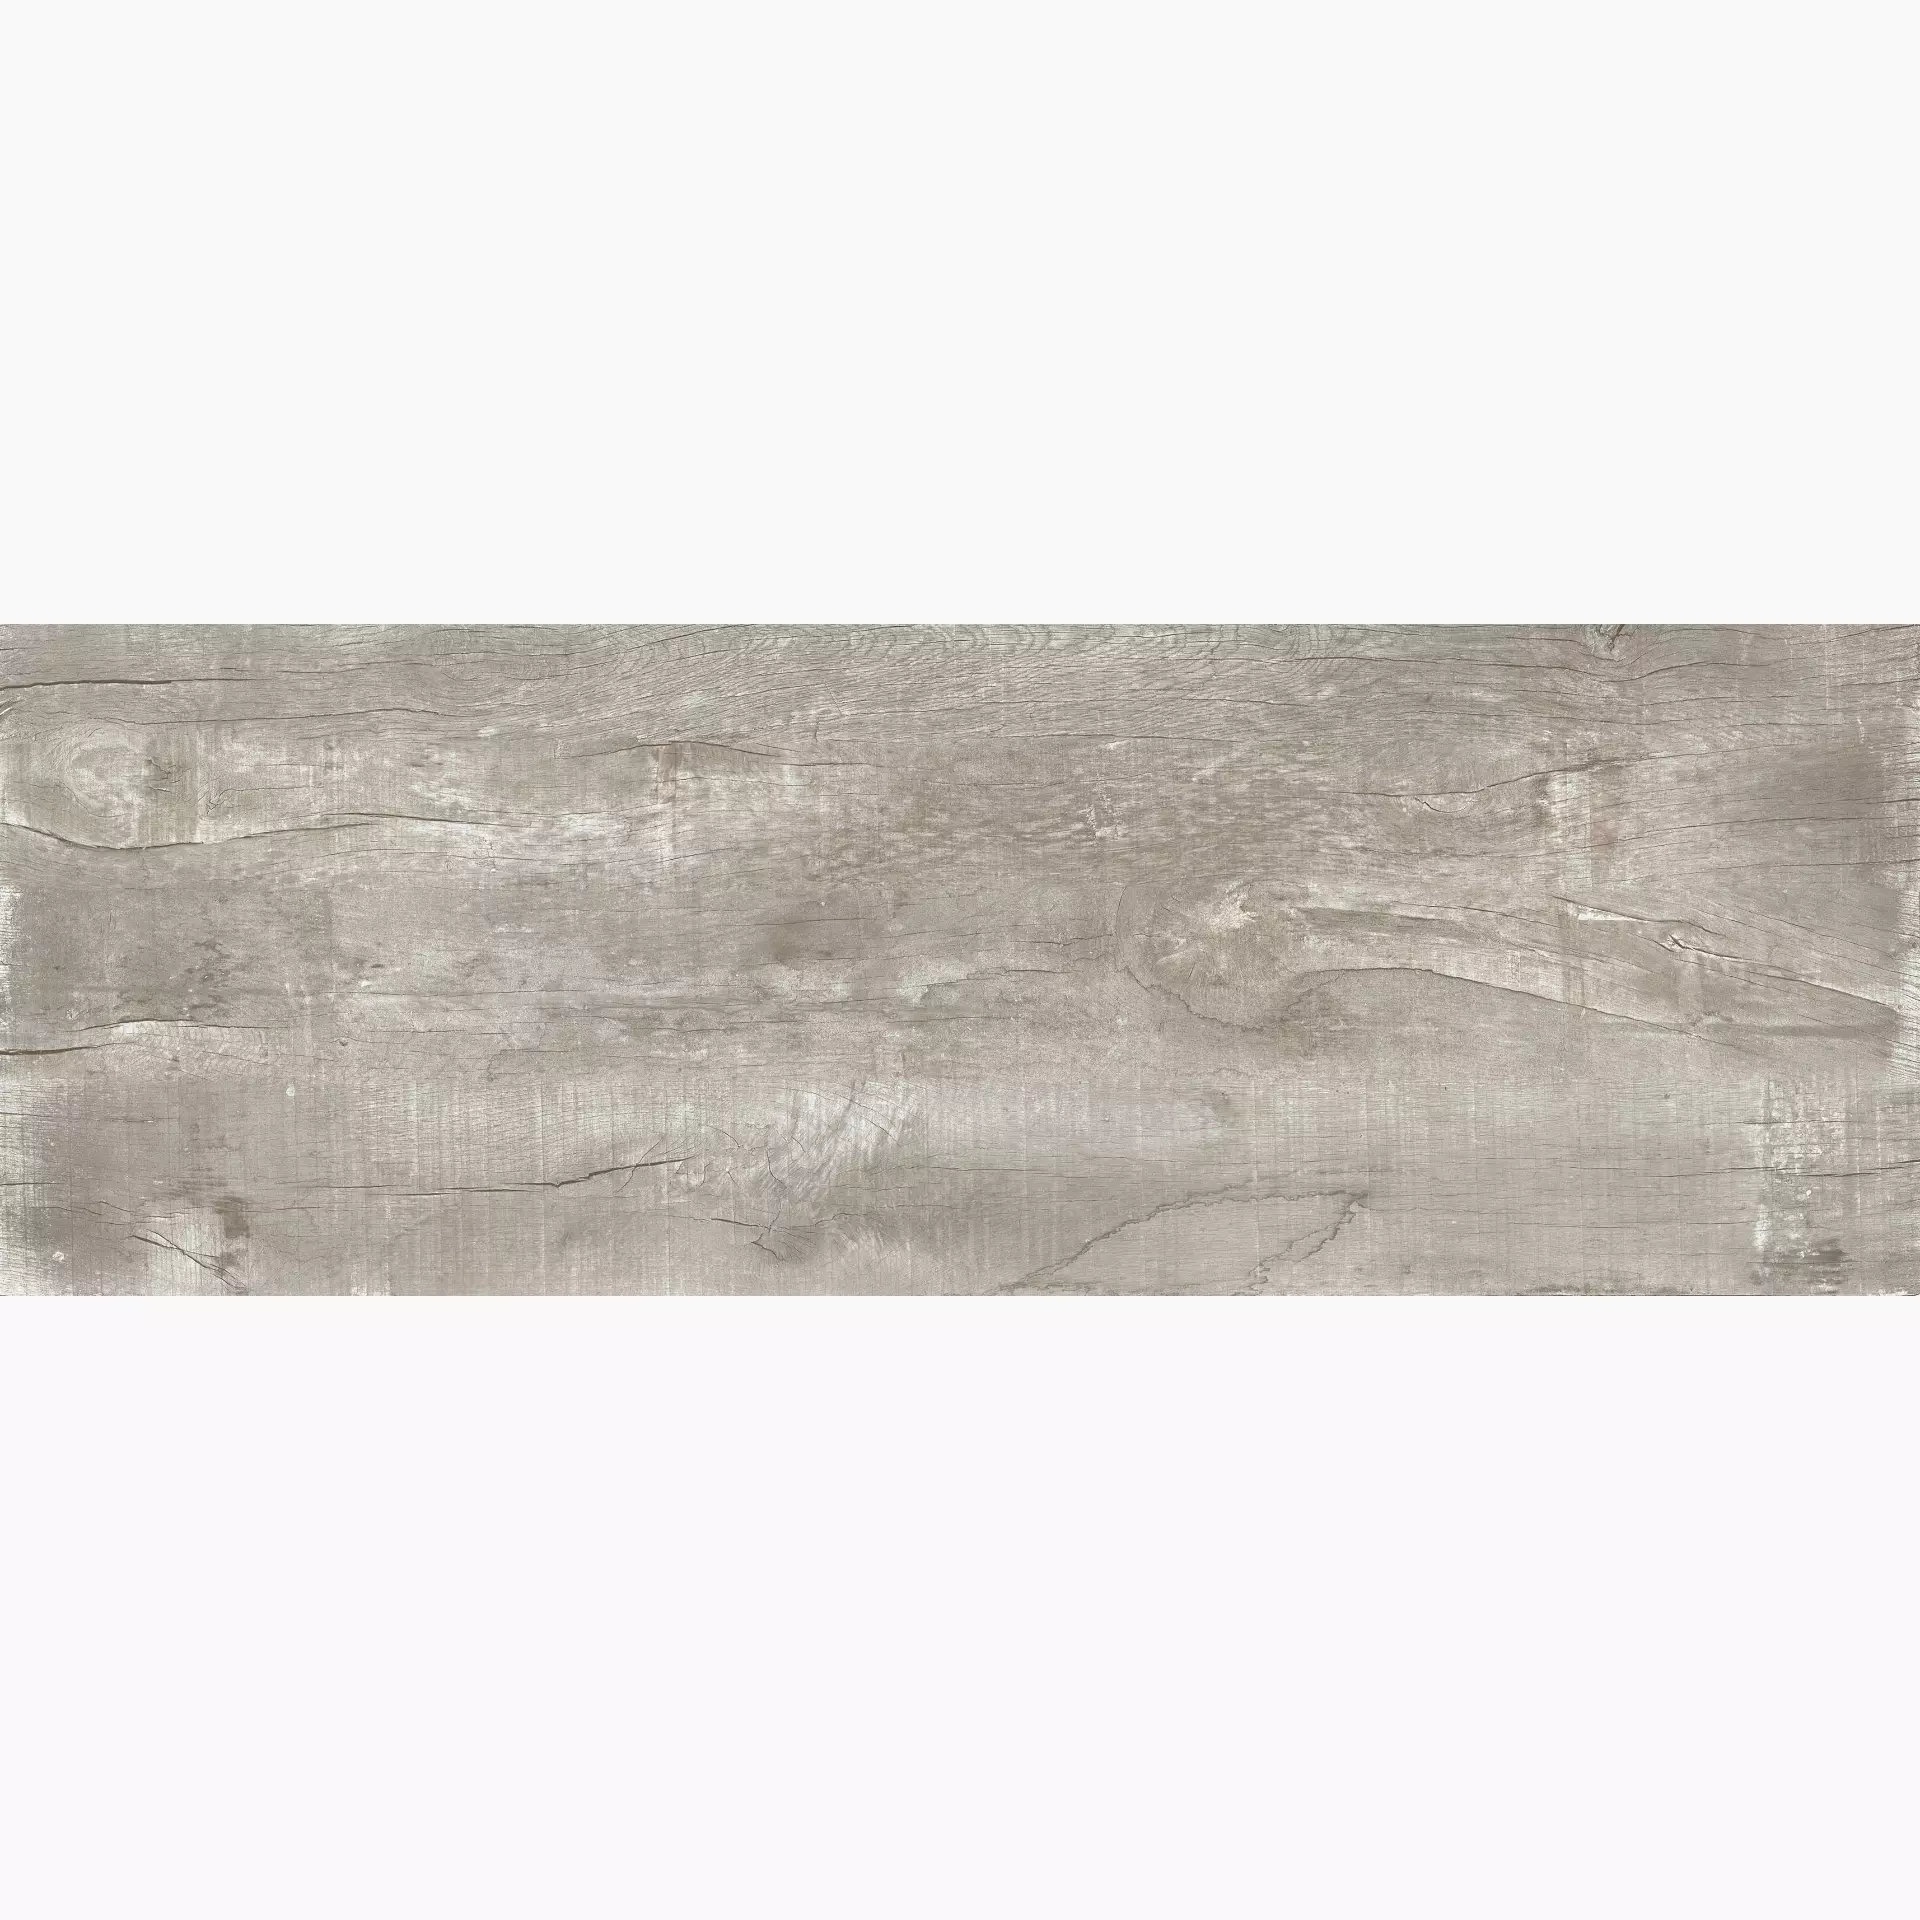 La Faenza Nirvana Grey Natural Slate Cut Matt 168482 60x180cm rectified 10mm - NIRVANA 18G